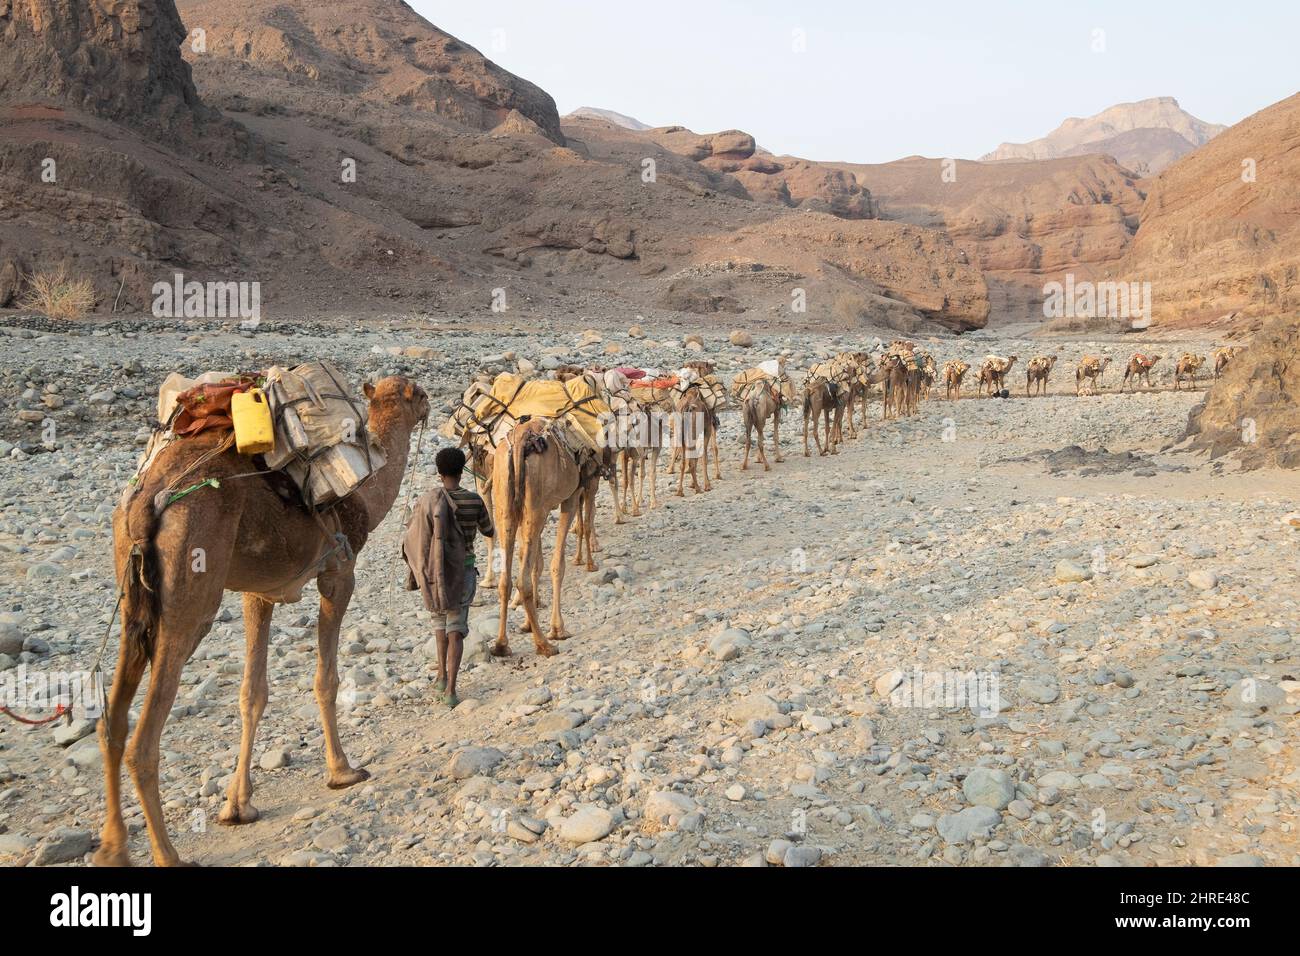 Caravan of camels, Wadi Saba canyons, Danakil Depression, Afar, Ethiopia Stock Photo